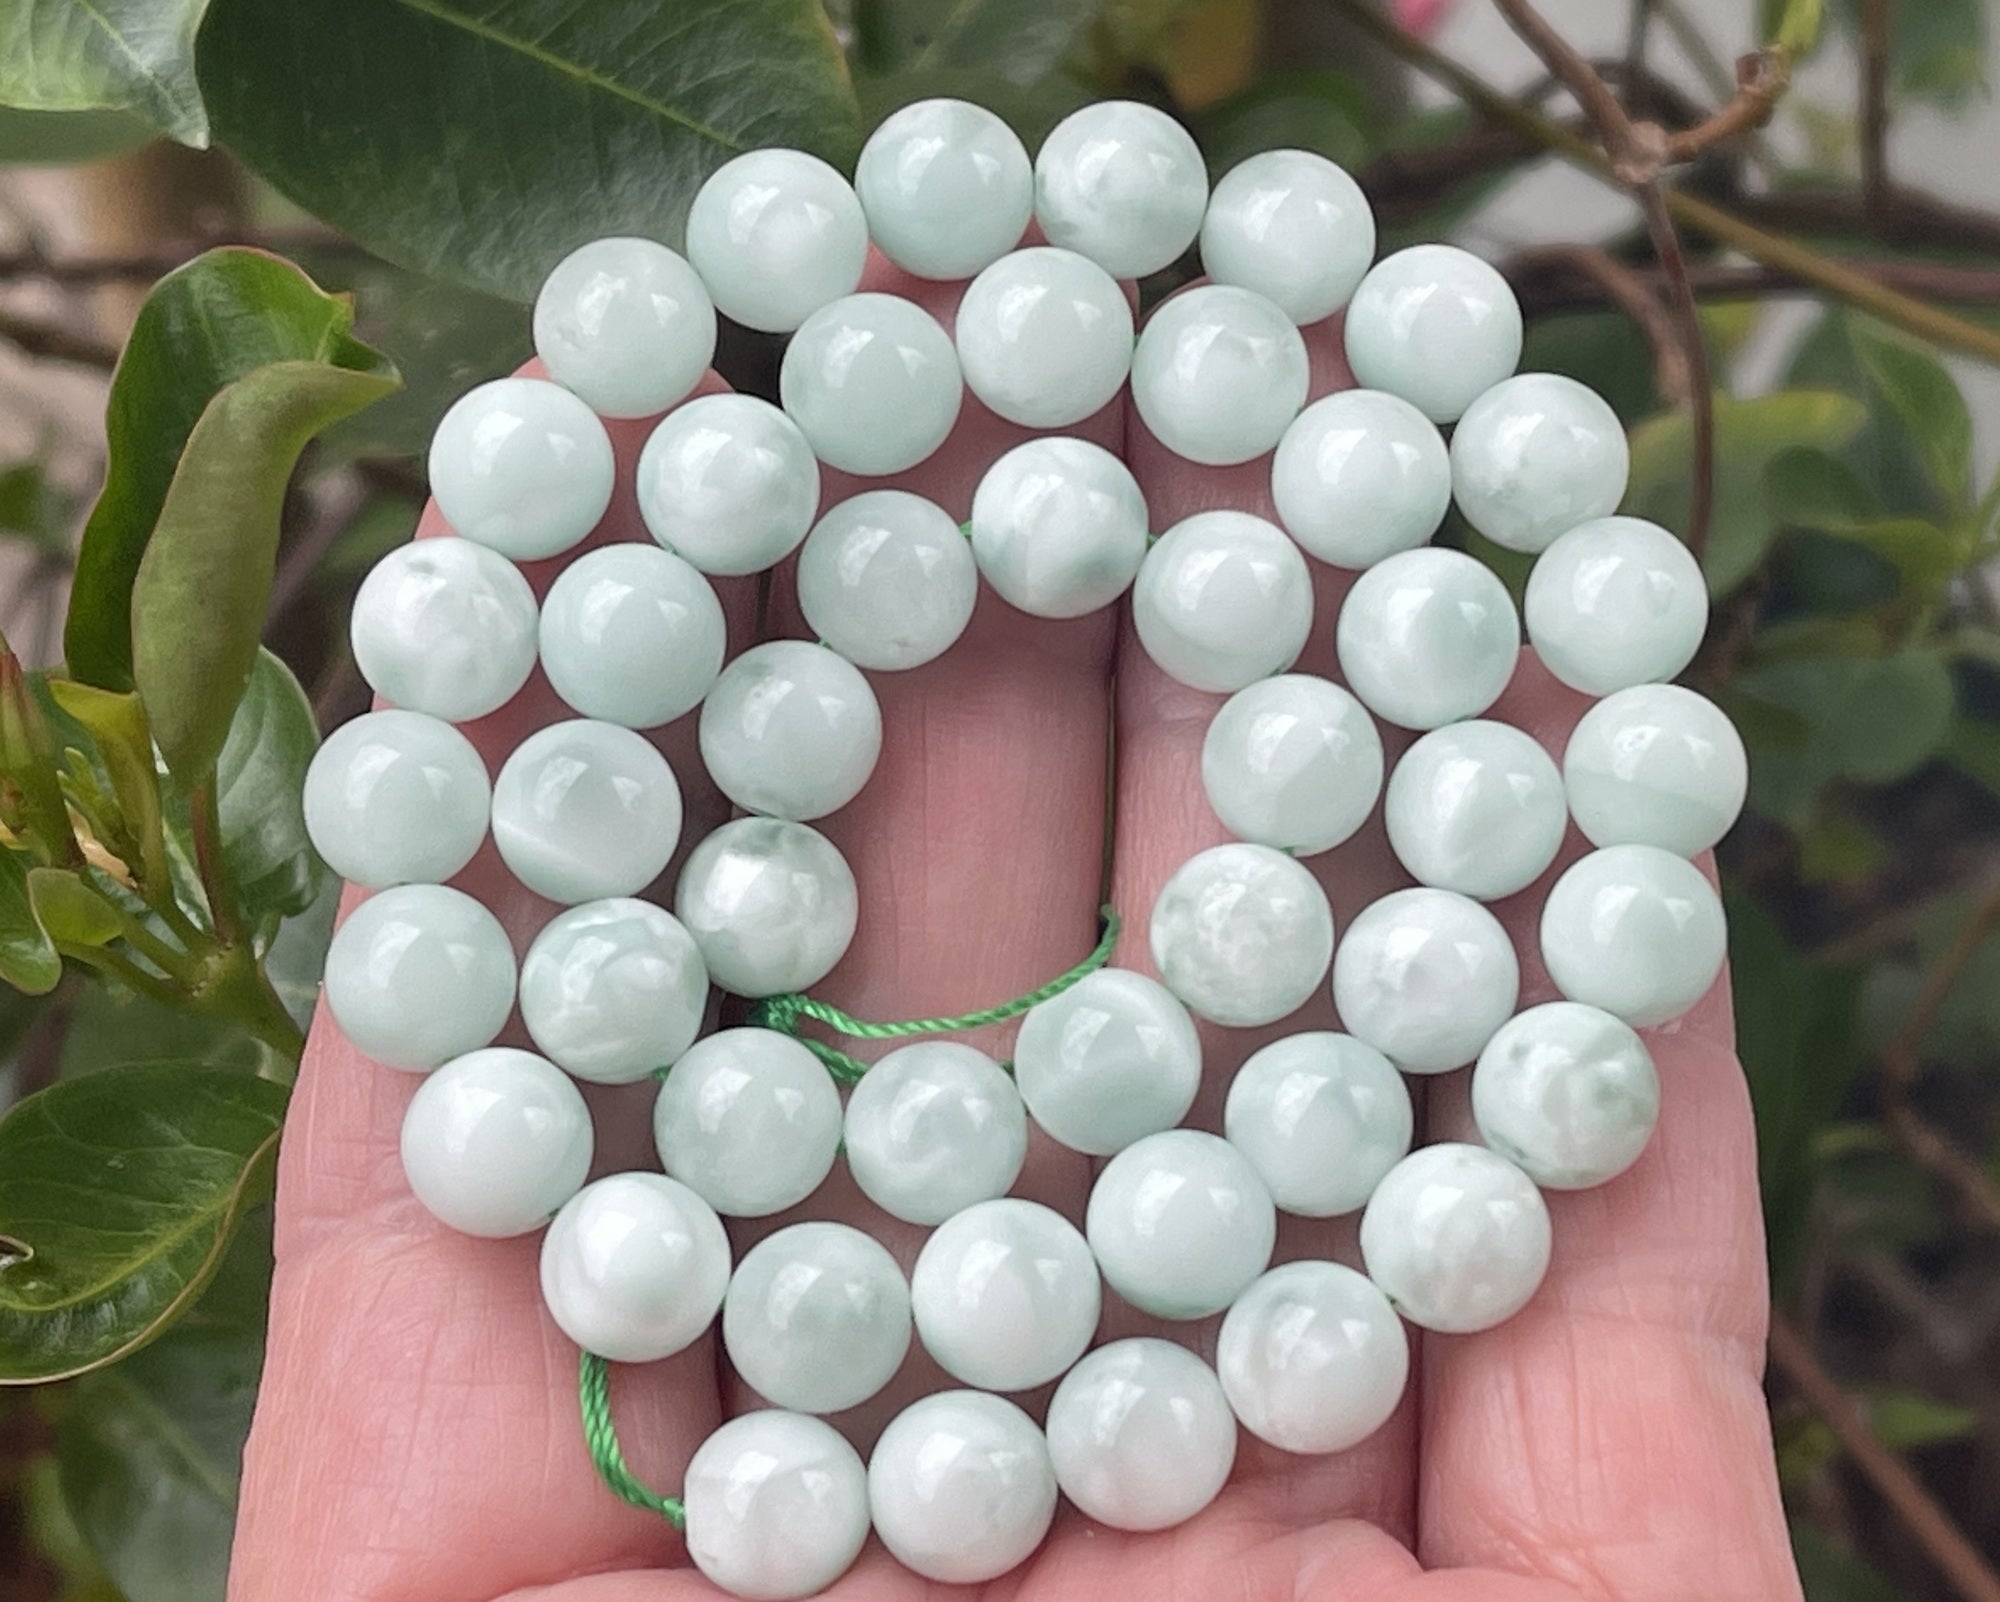 Green Angelite 8mm round natural gemstone beads 16" strand - Oz Beads 